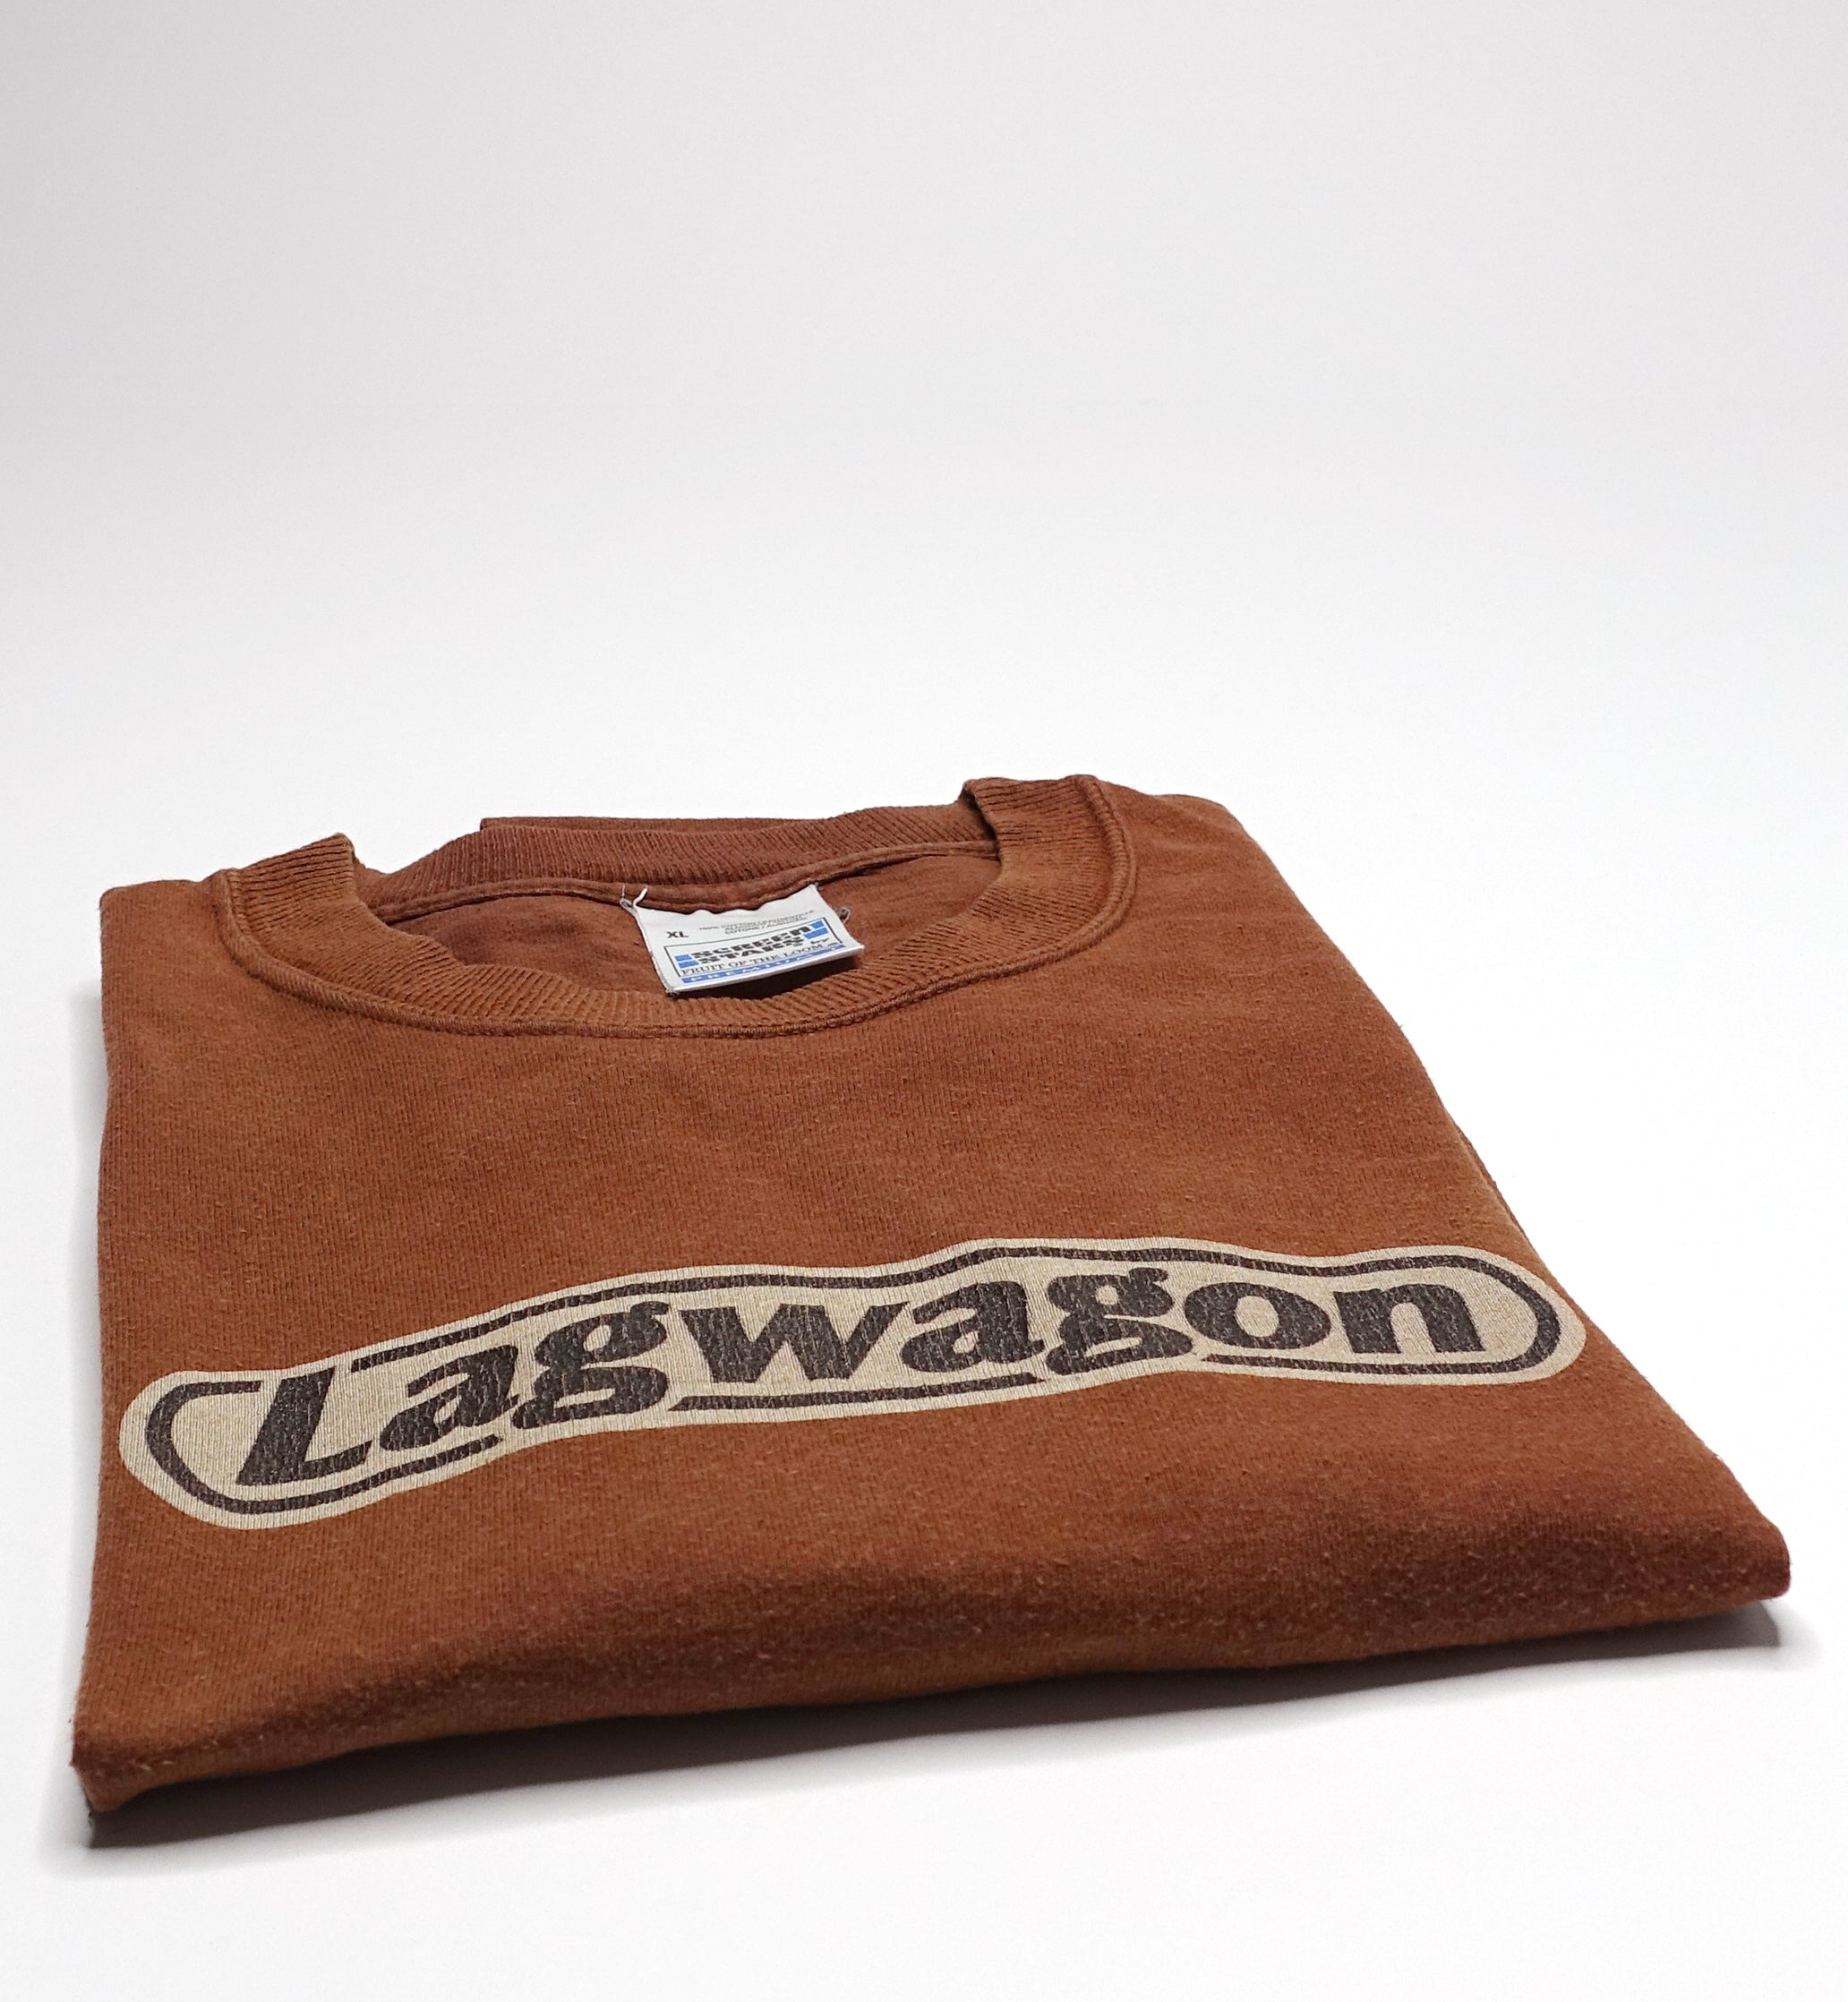 Lagwagon - To All My Friends 90's Tour Shirt Size XL